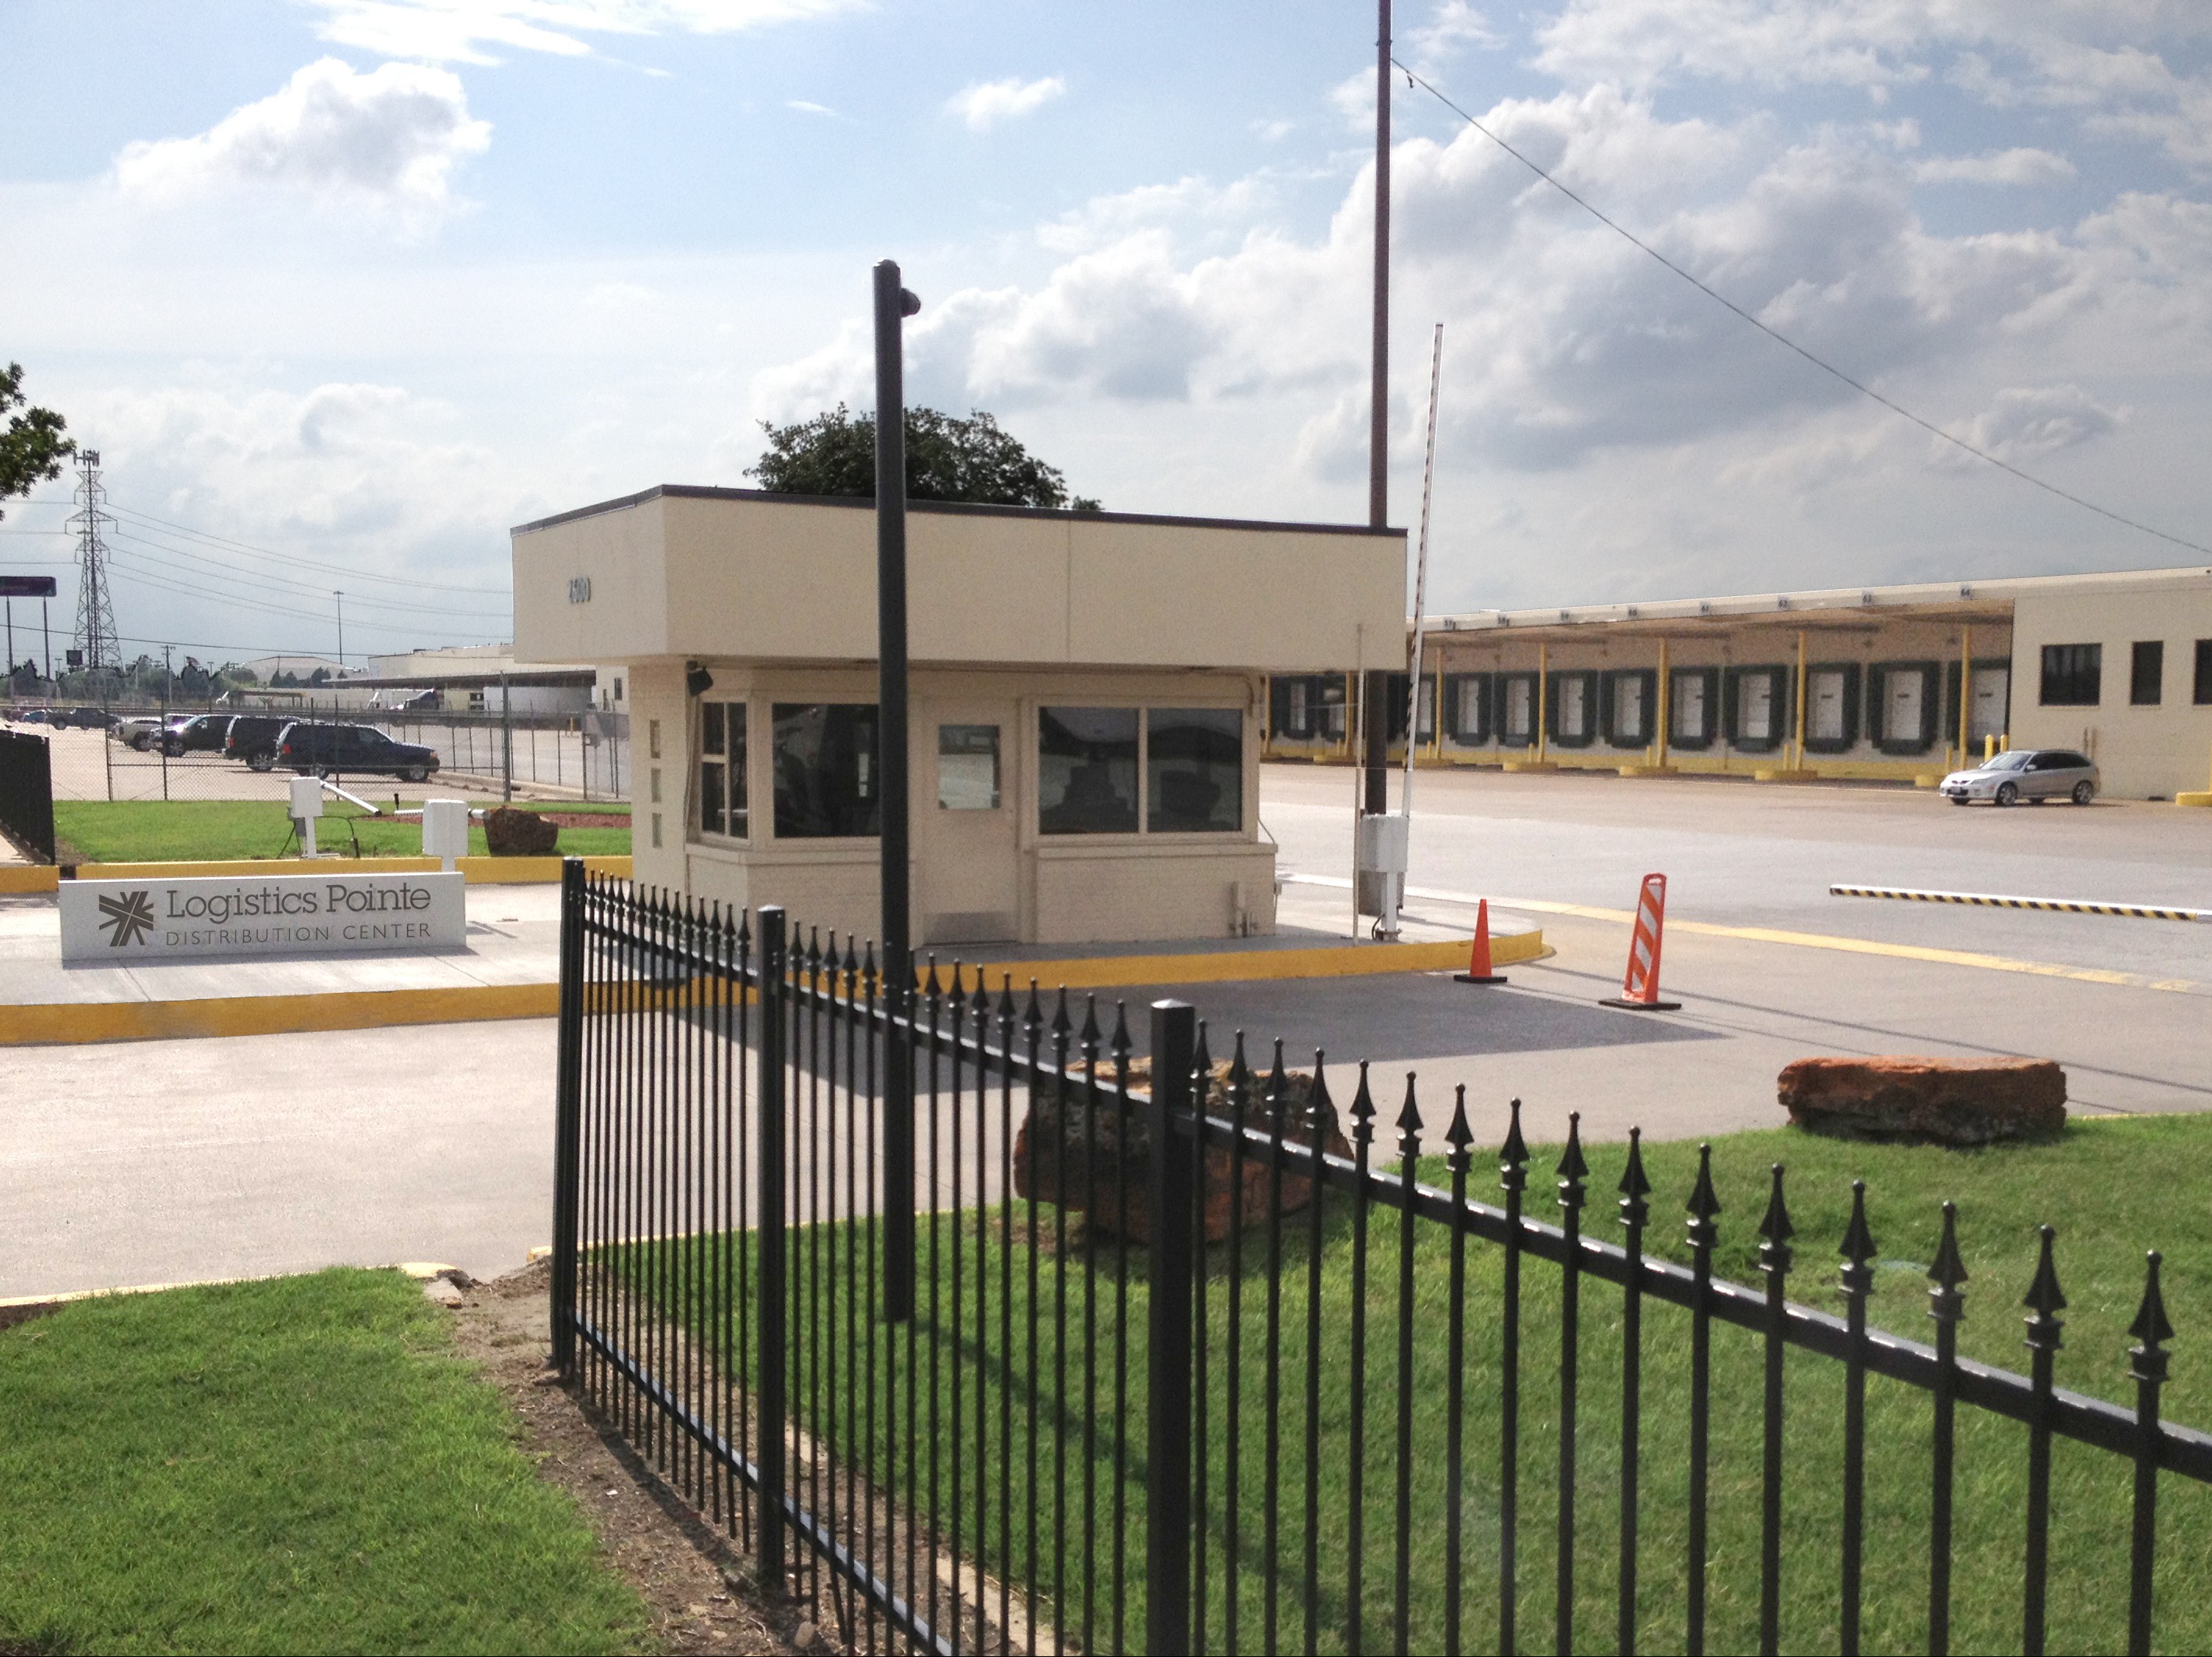 Logistics Pointe Distribution Center in Garland, Texas